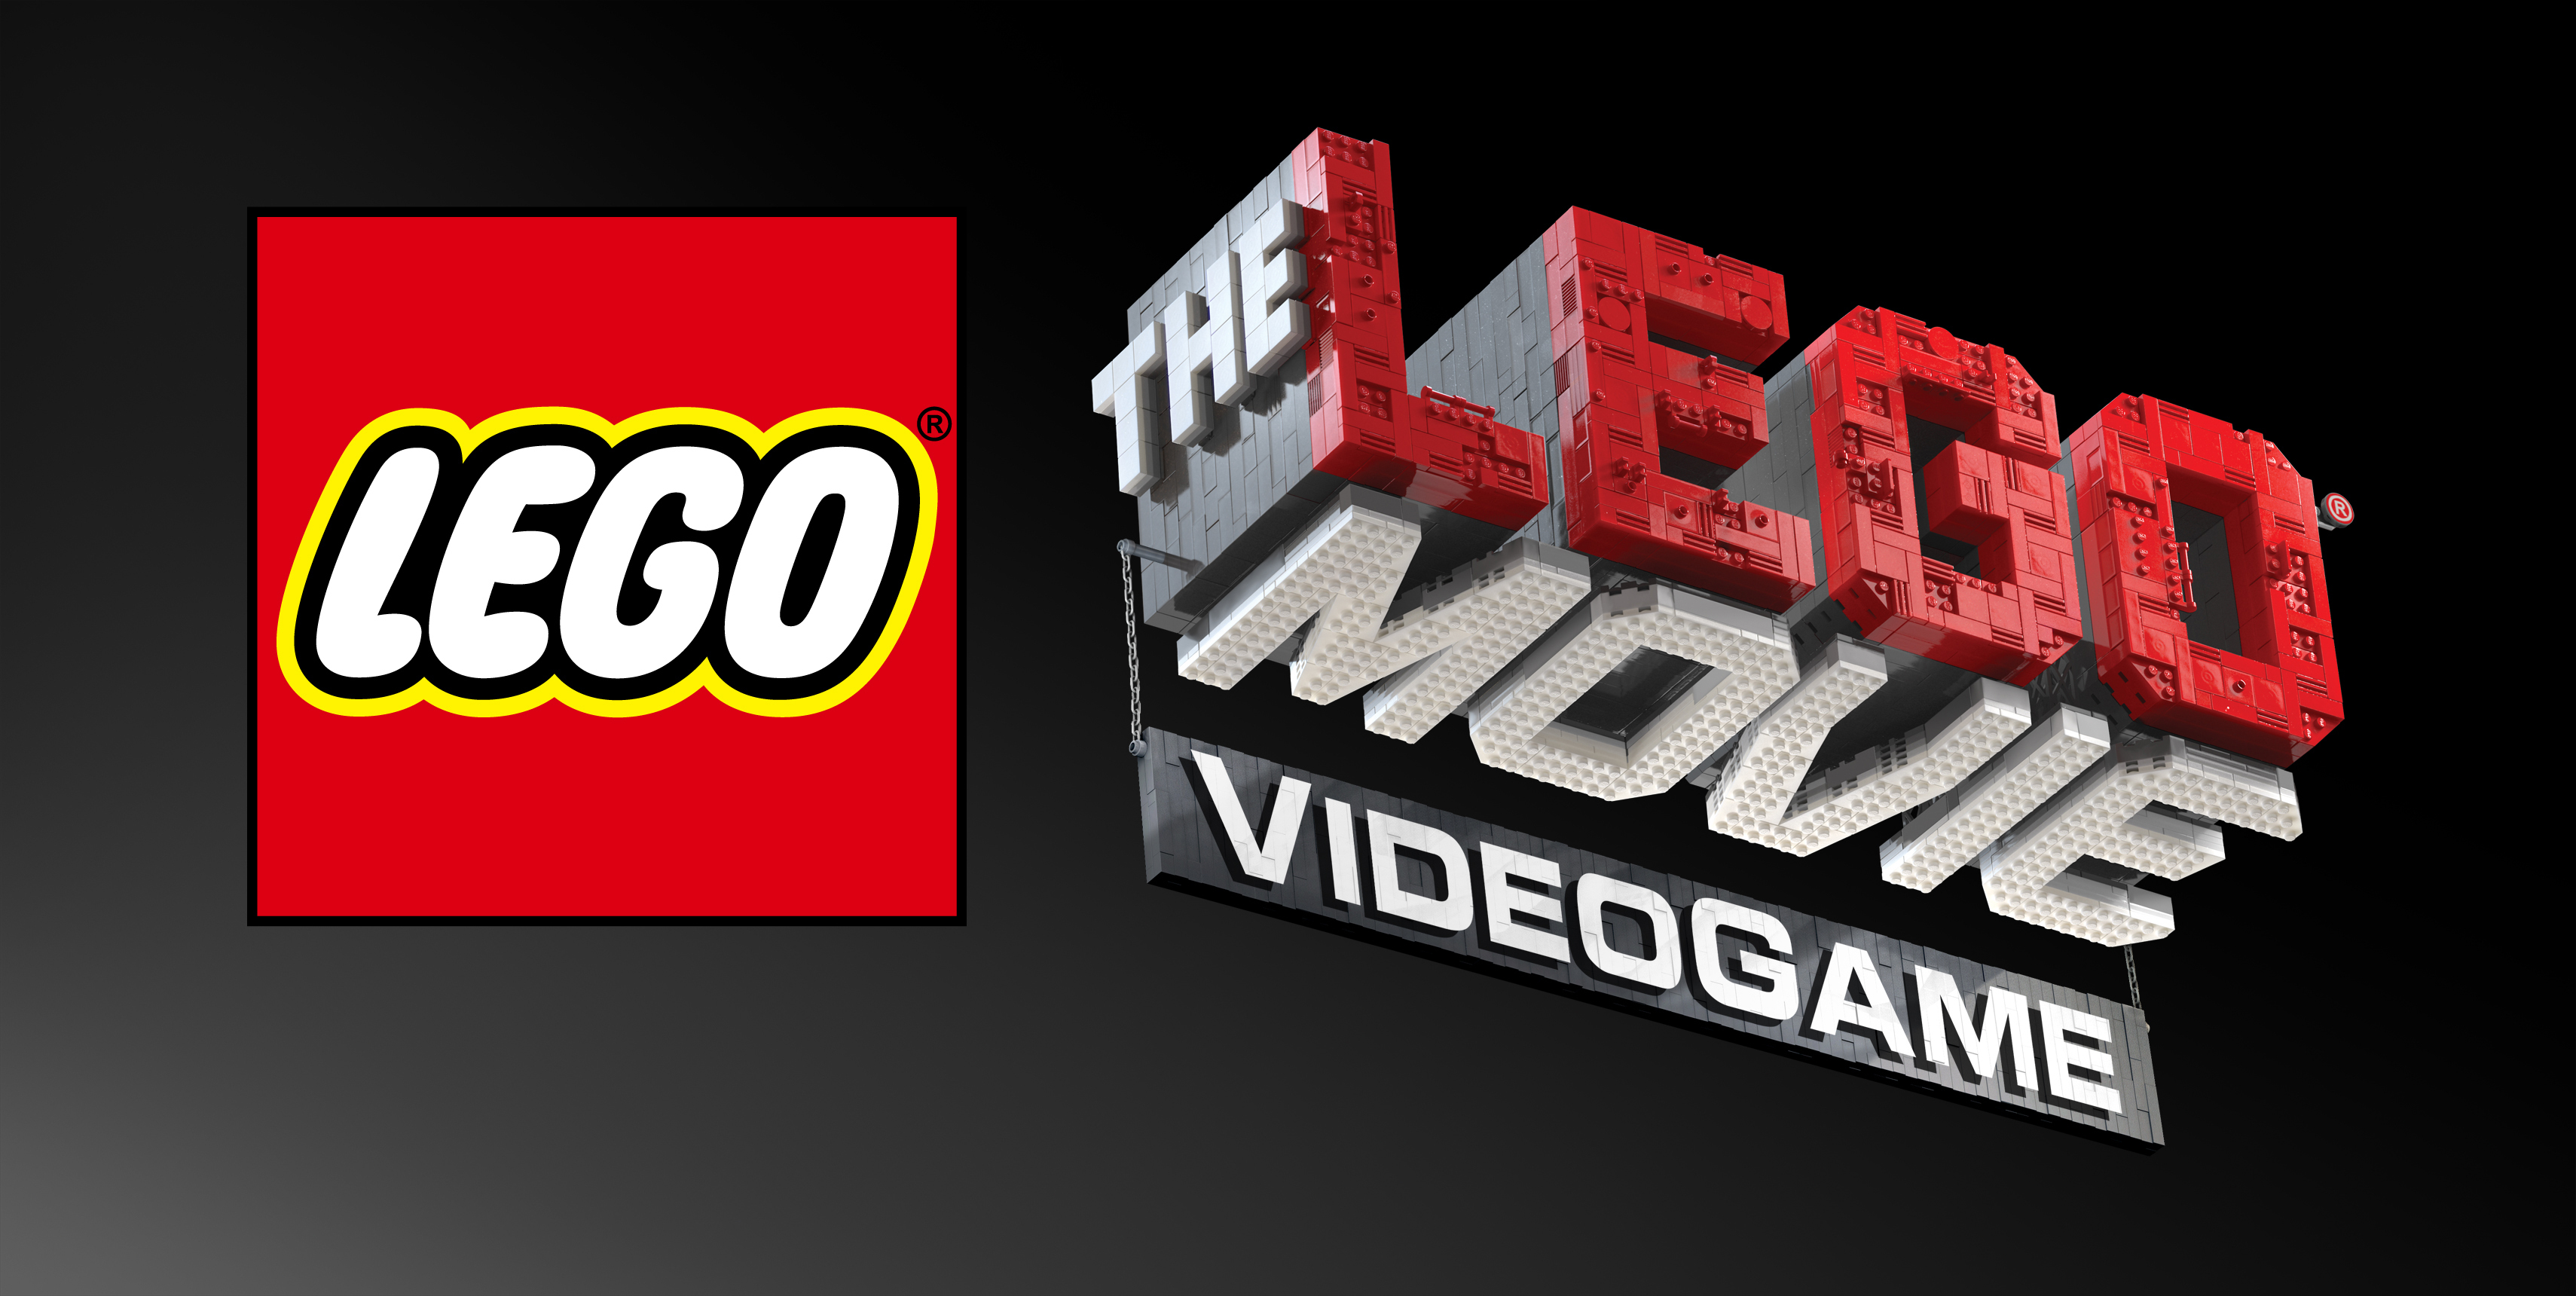 WB Games Confirms No Further Development of LEGO Dimensions – Bricking  Around